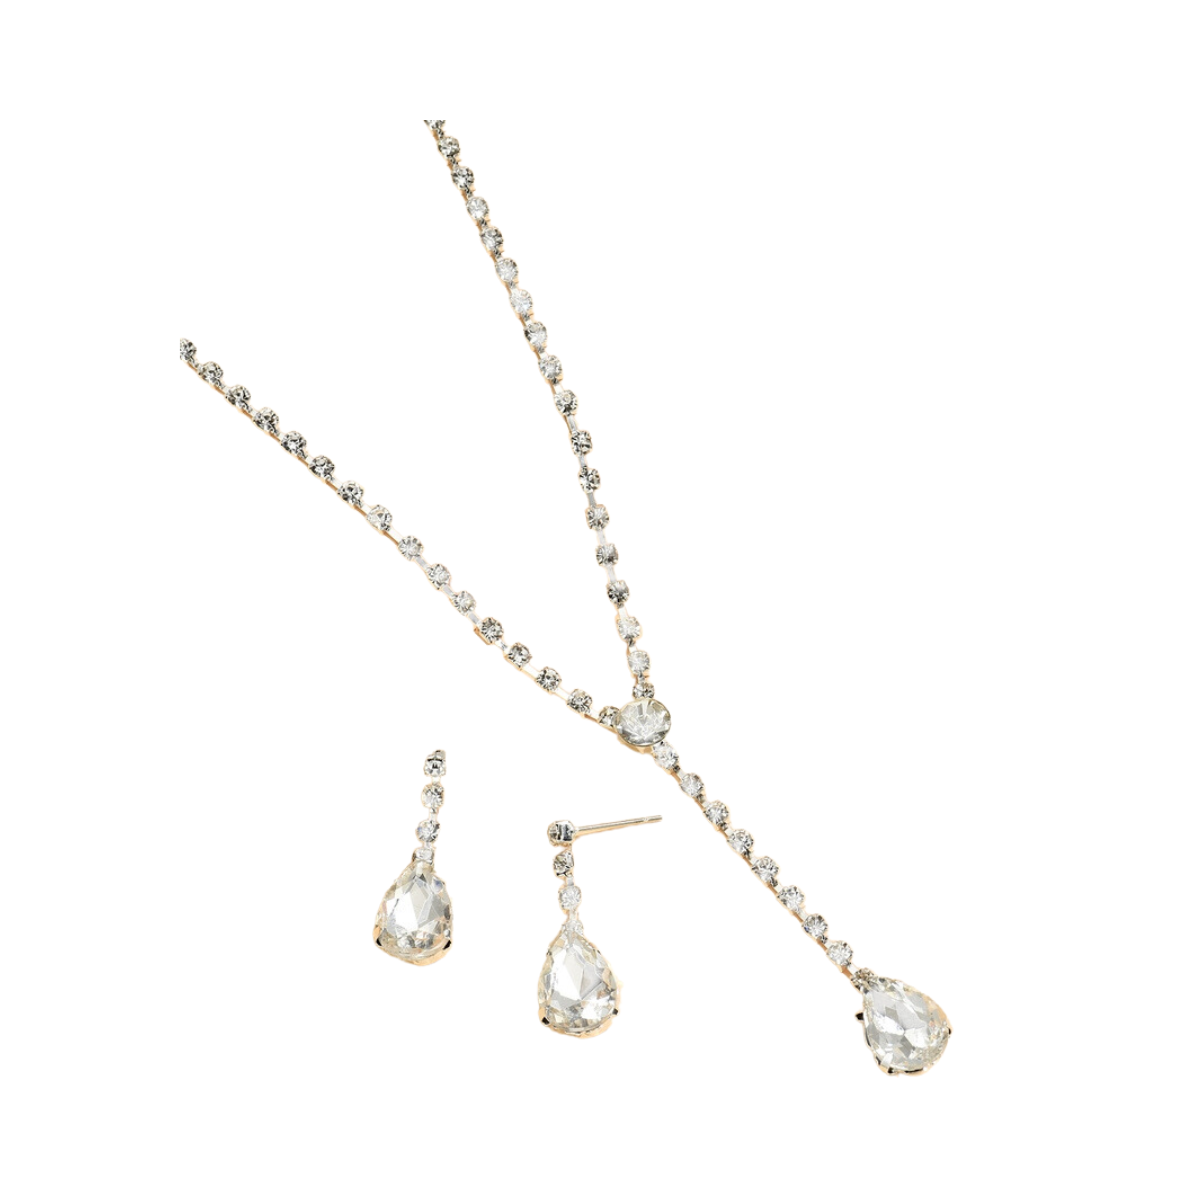 20pcs - Sparkling Crystal Tear Drop Pendant Necklace and Earrings Set (Total 10 Sets)|GCJ425|UK seller